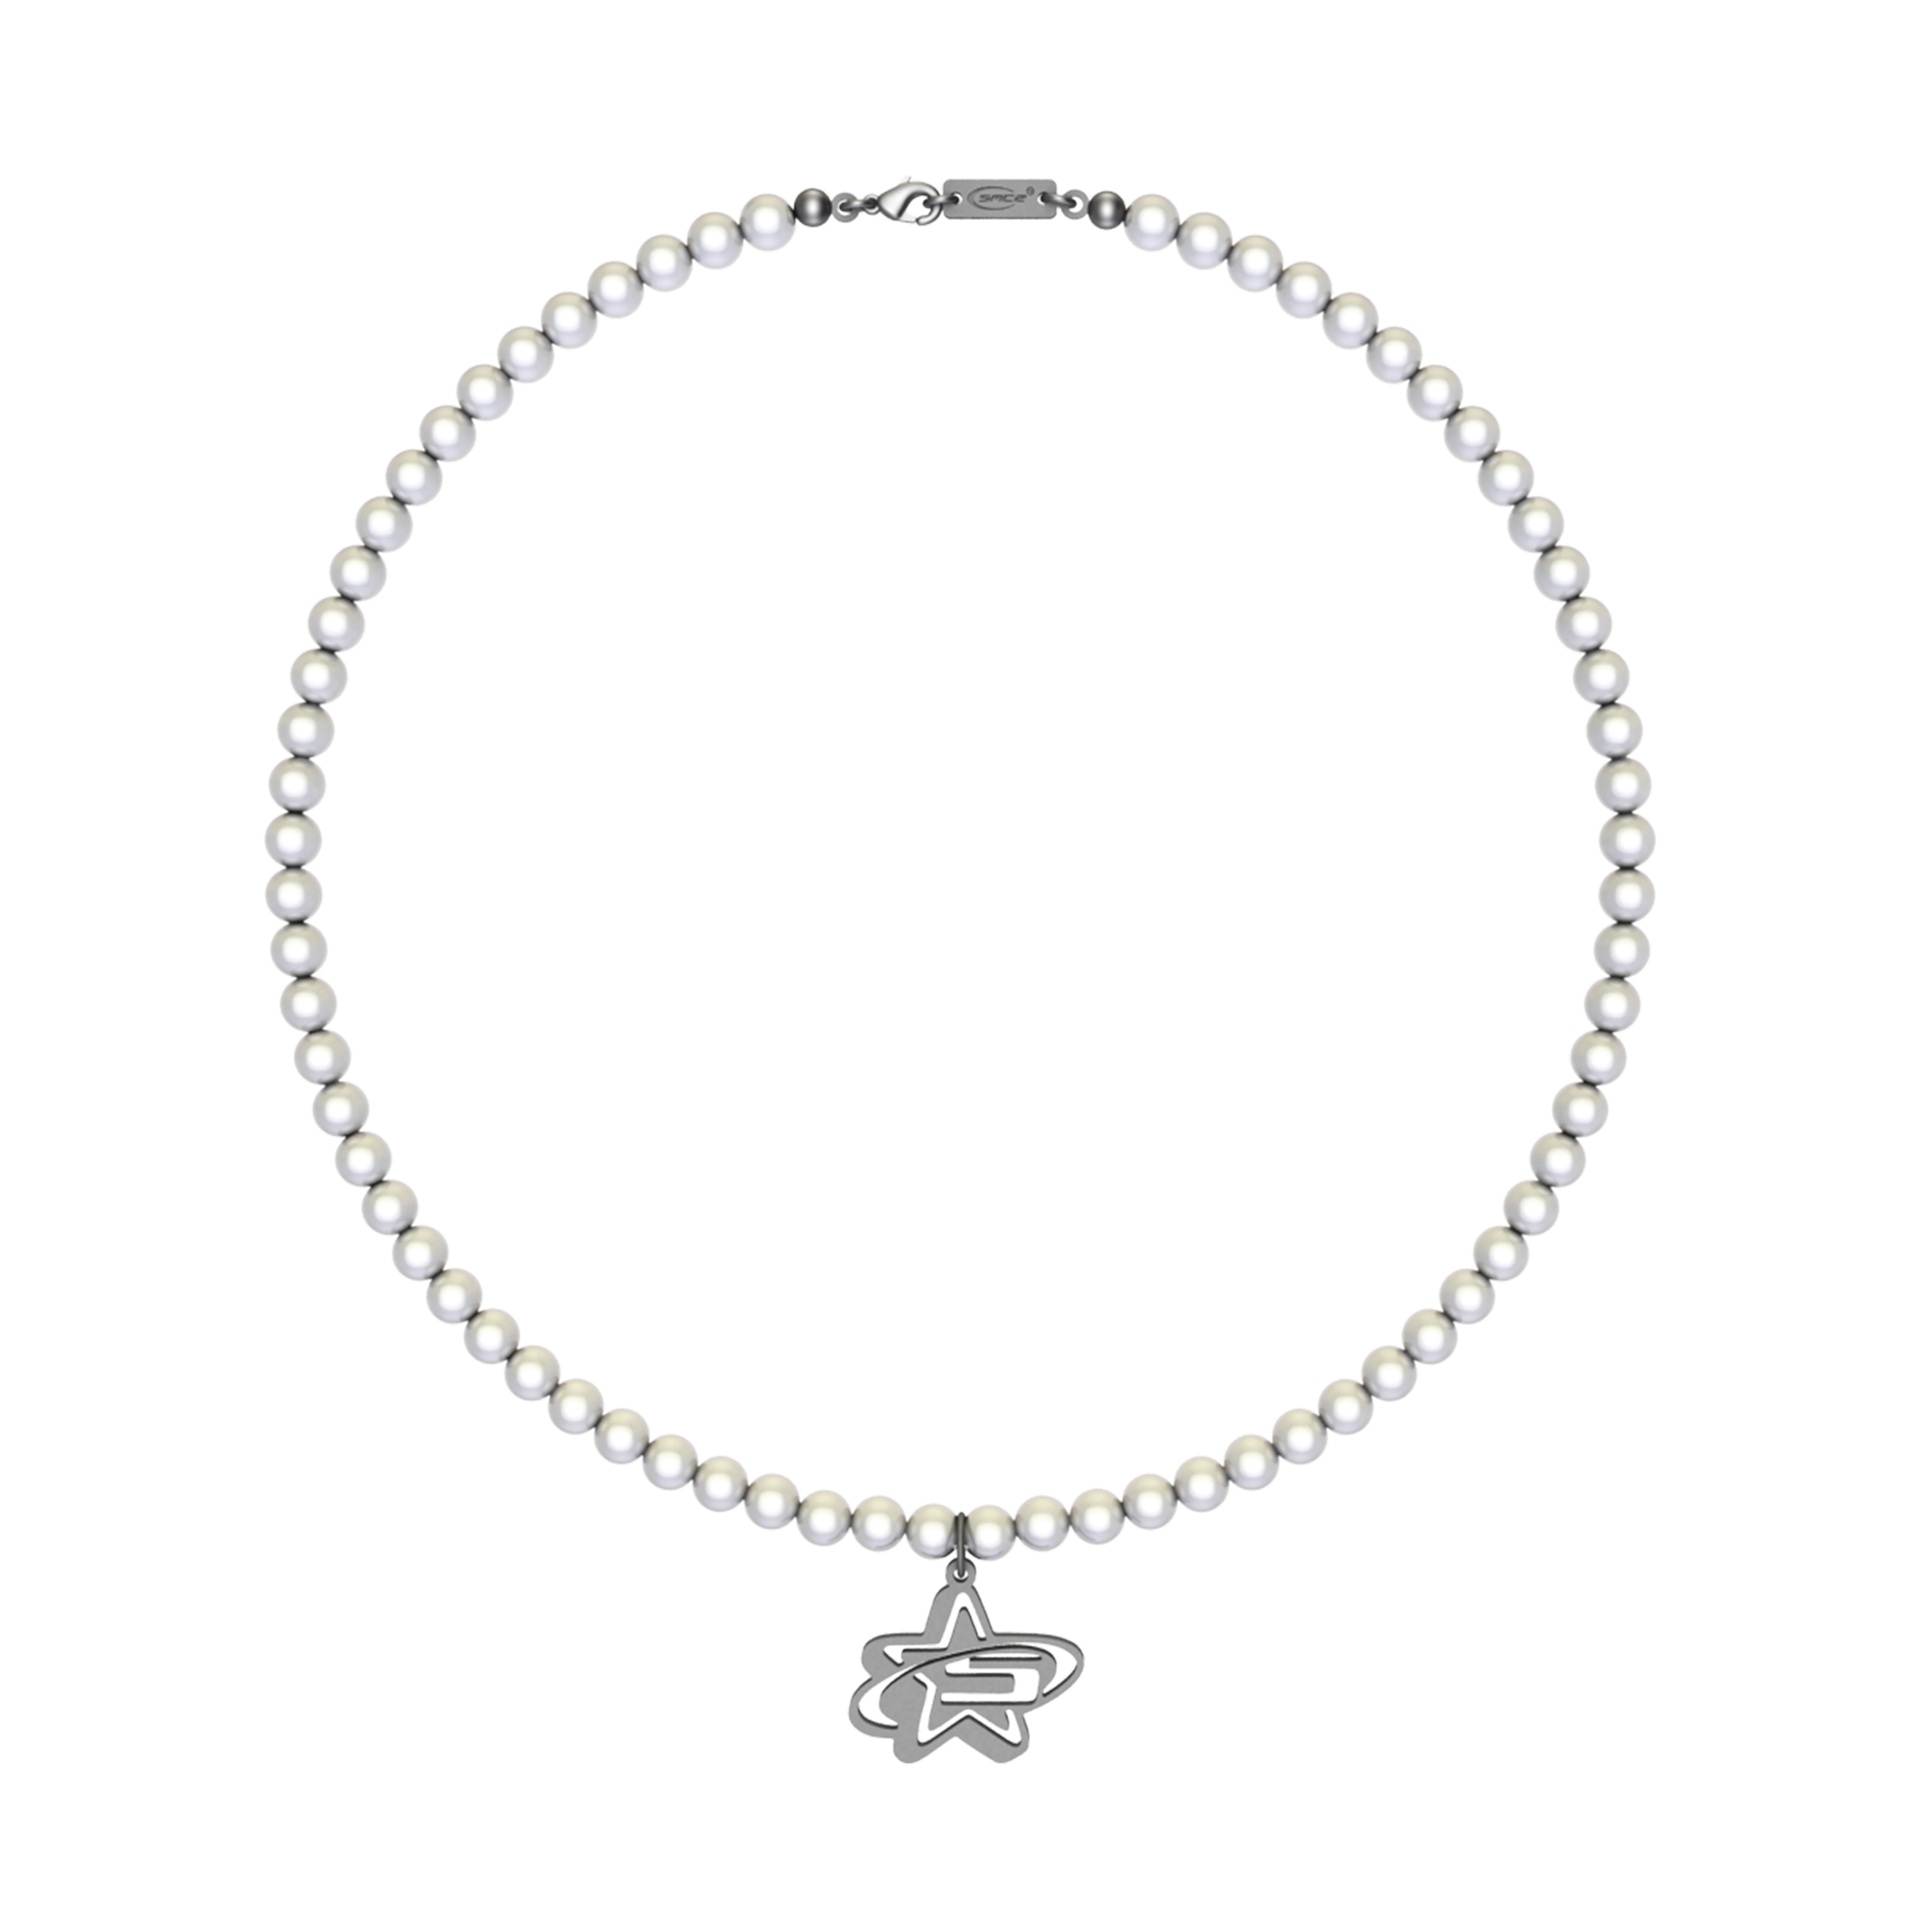 Pearl Necklaces - 5mc2™